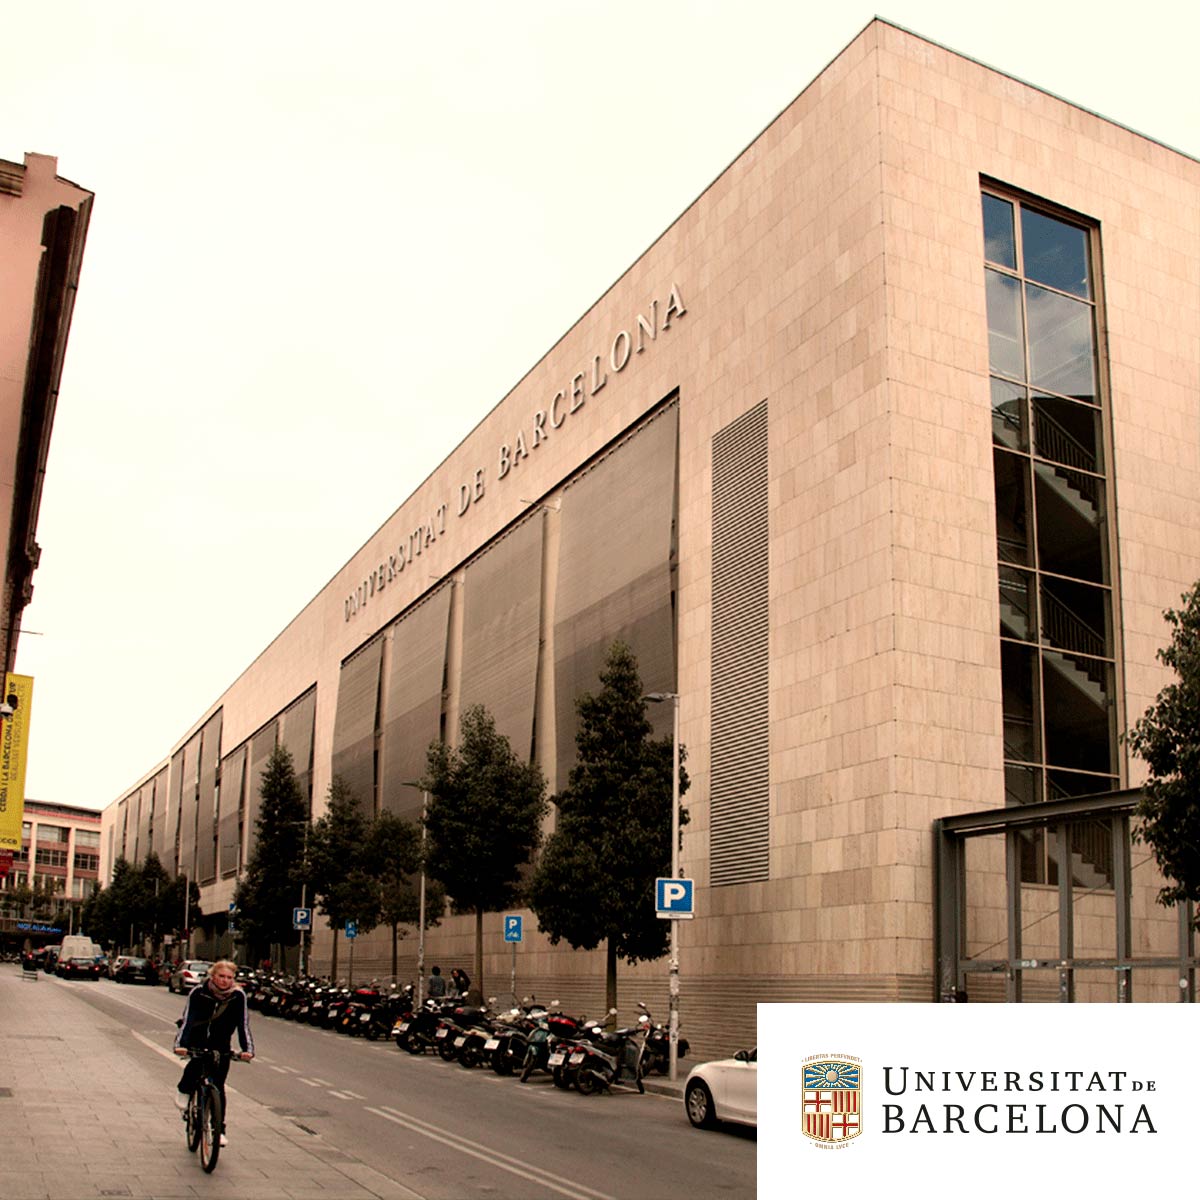 Universitat de Barcelona (UB)